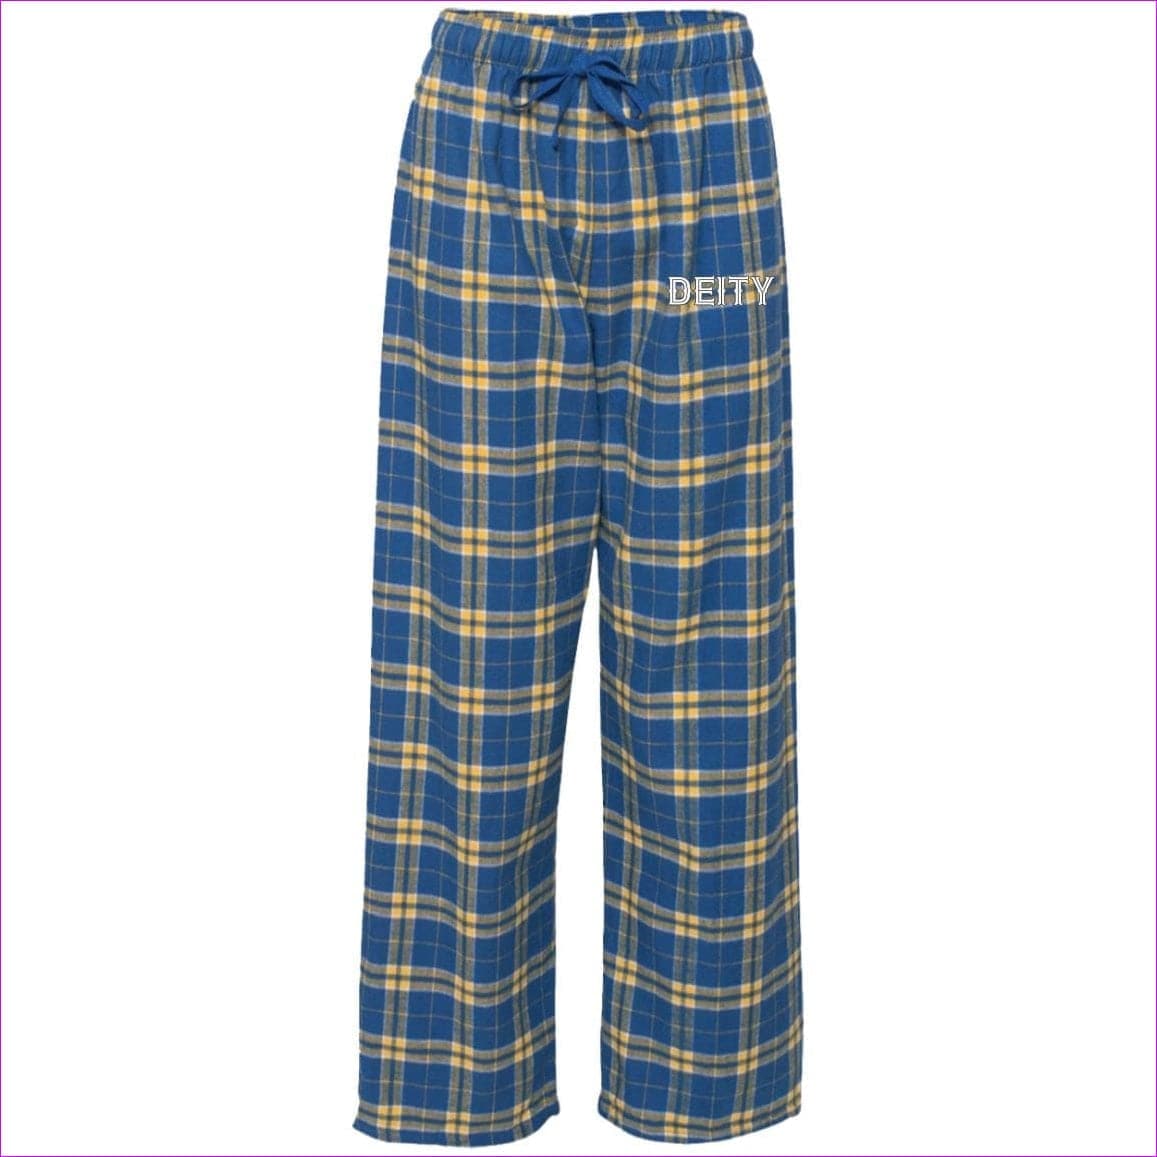 Royal/Gold Deity Flannel Pants - unisex pajamas Pants at TFC&H Co.